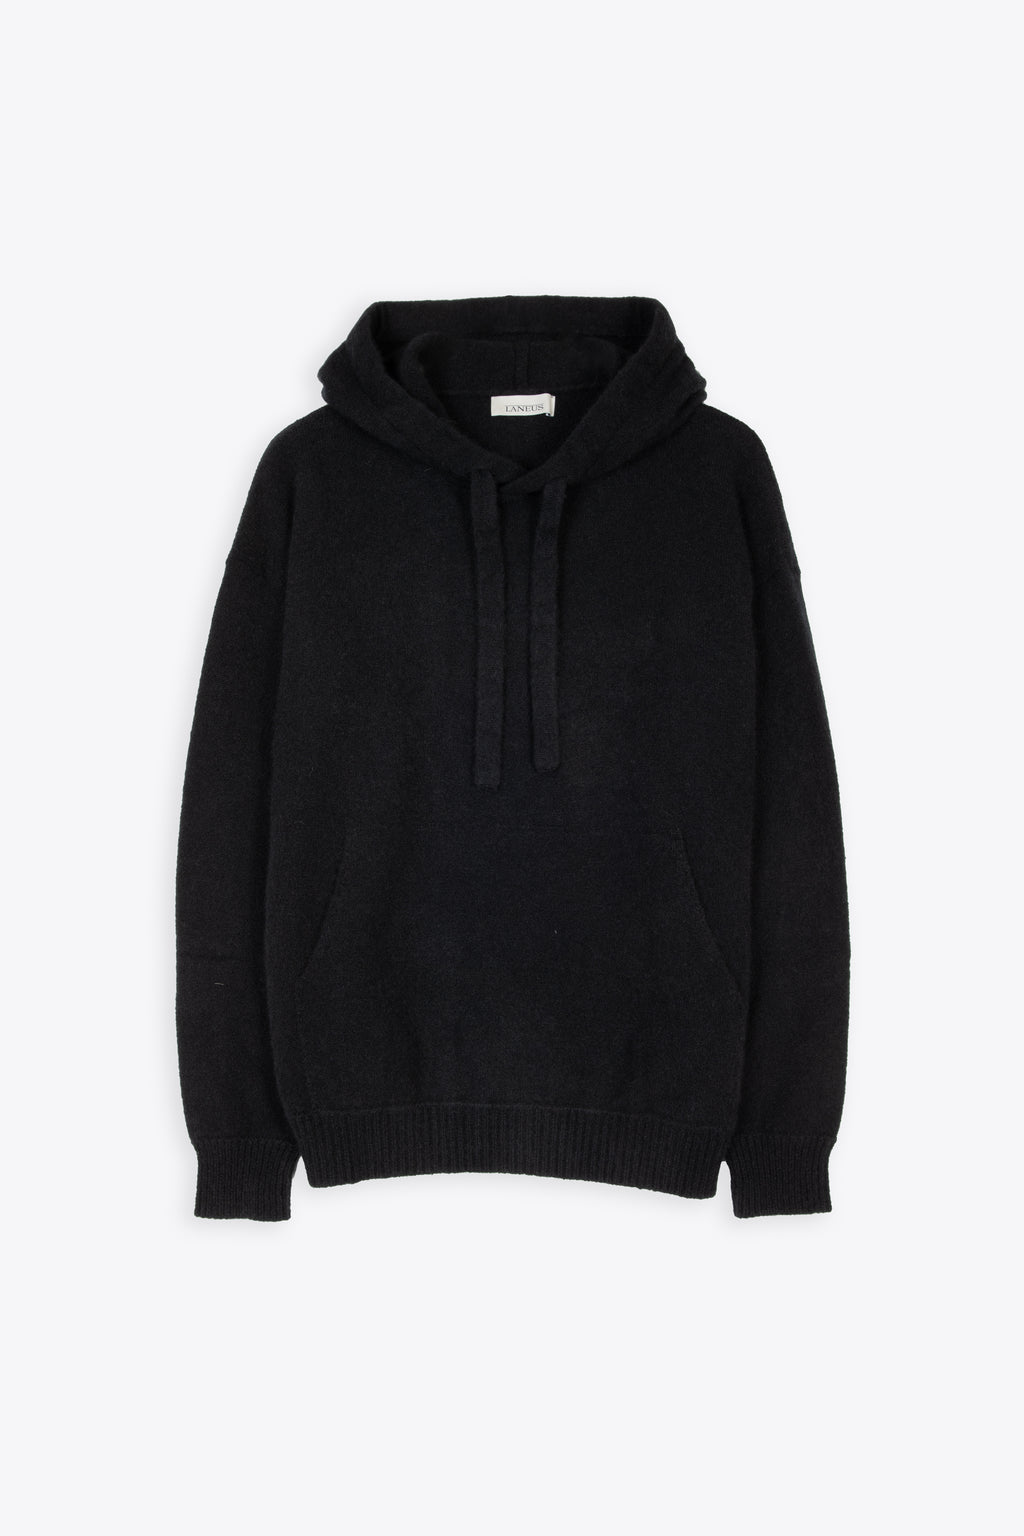 alt-image__Black-cashmere-hooded-sweater